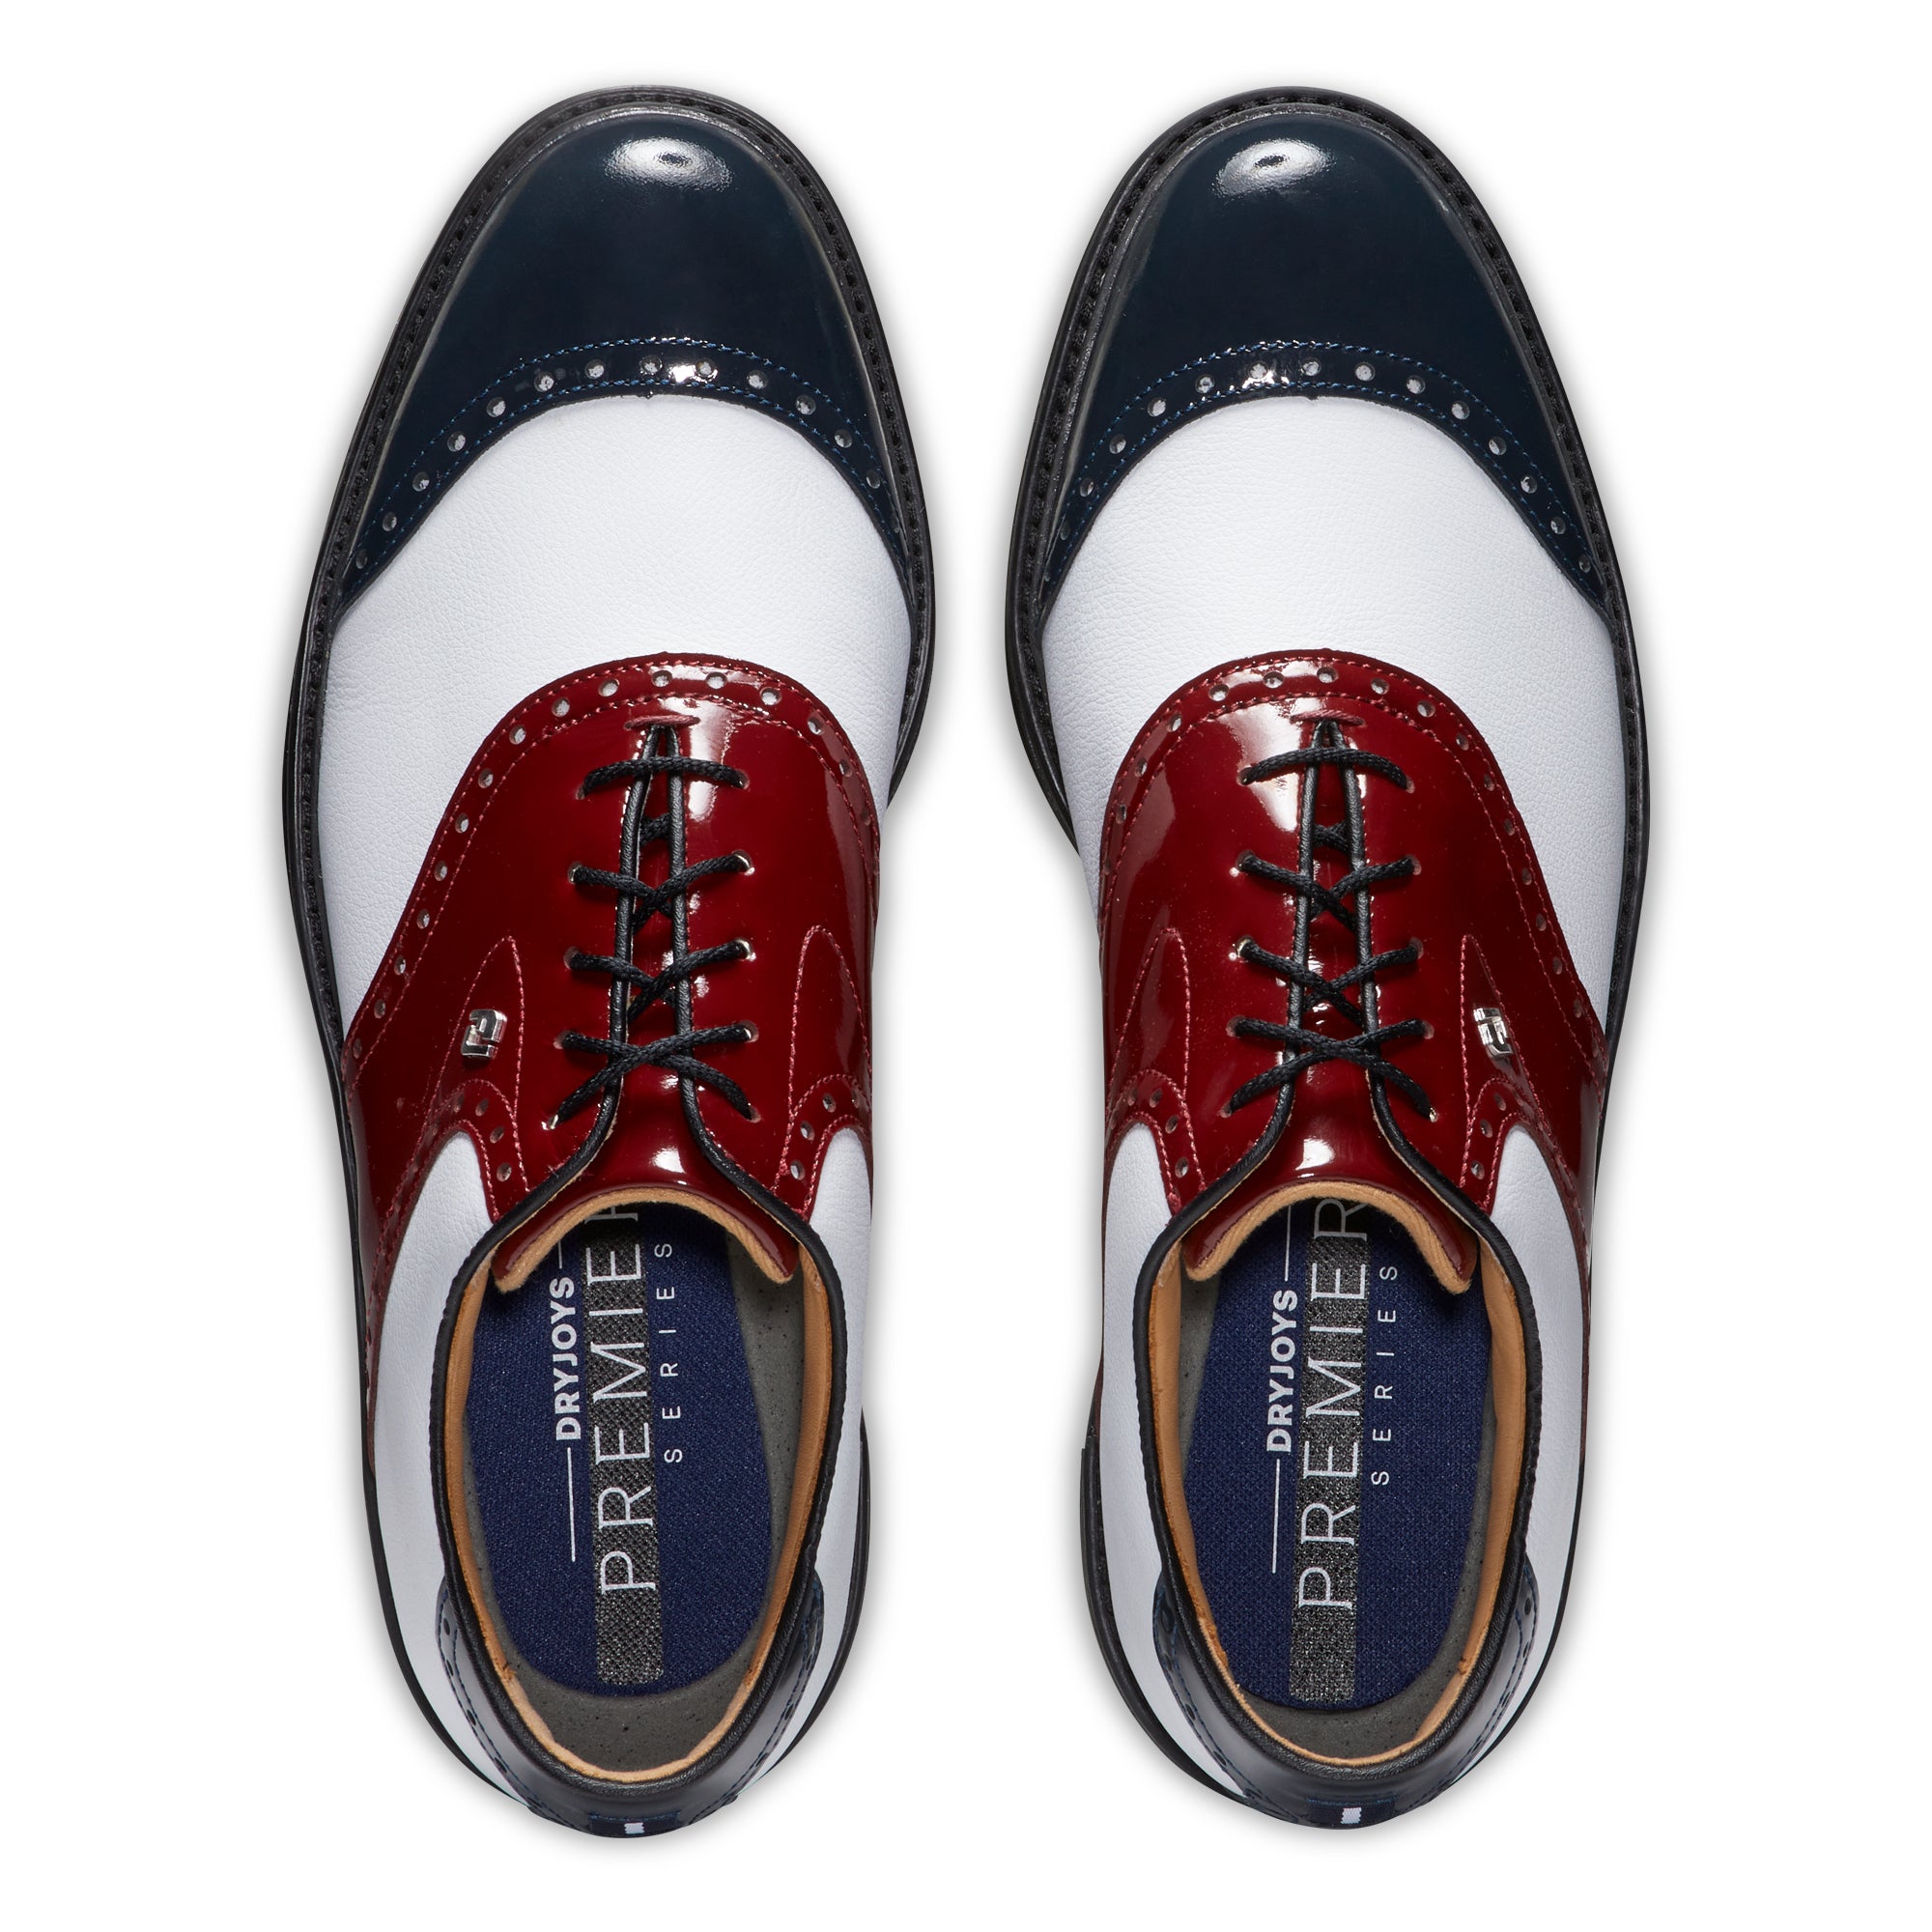 footjoy-premiere-series-wilcox-golf-shoes-54522-white-navy-wine